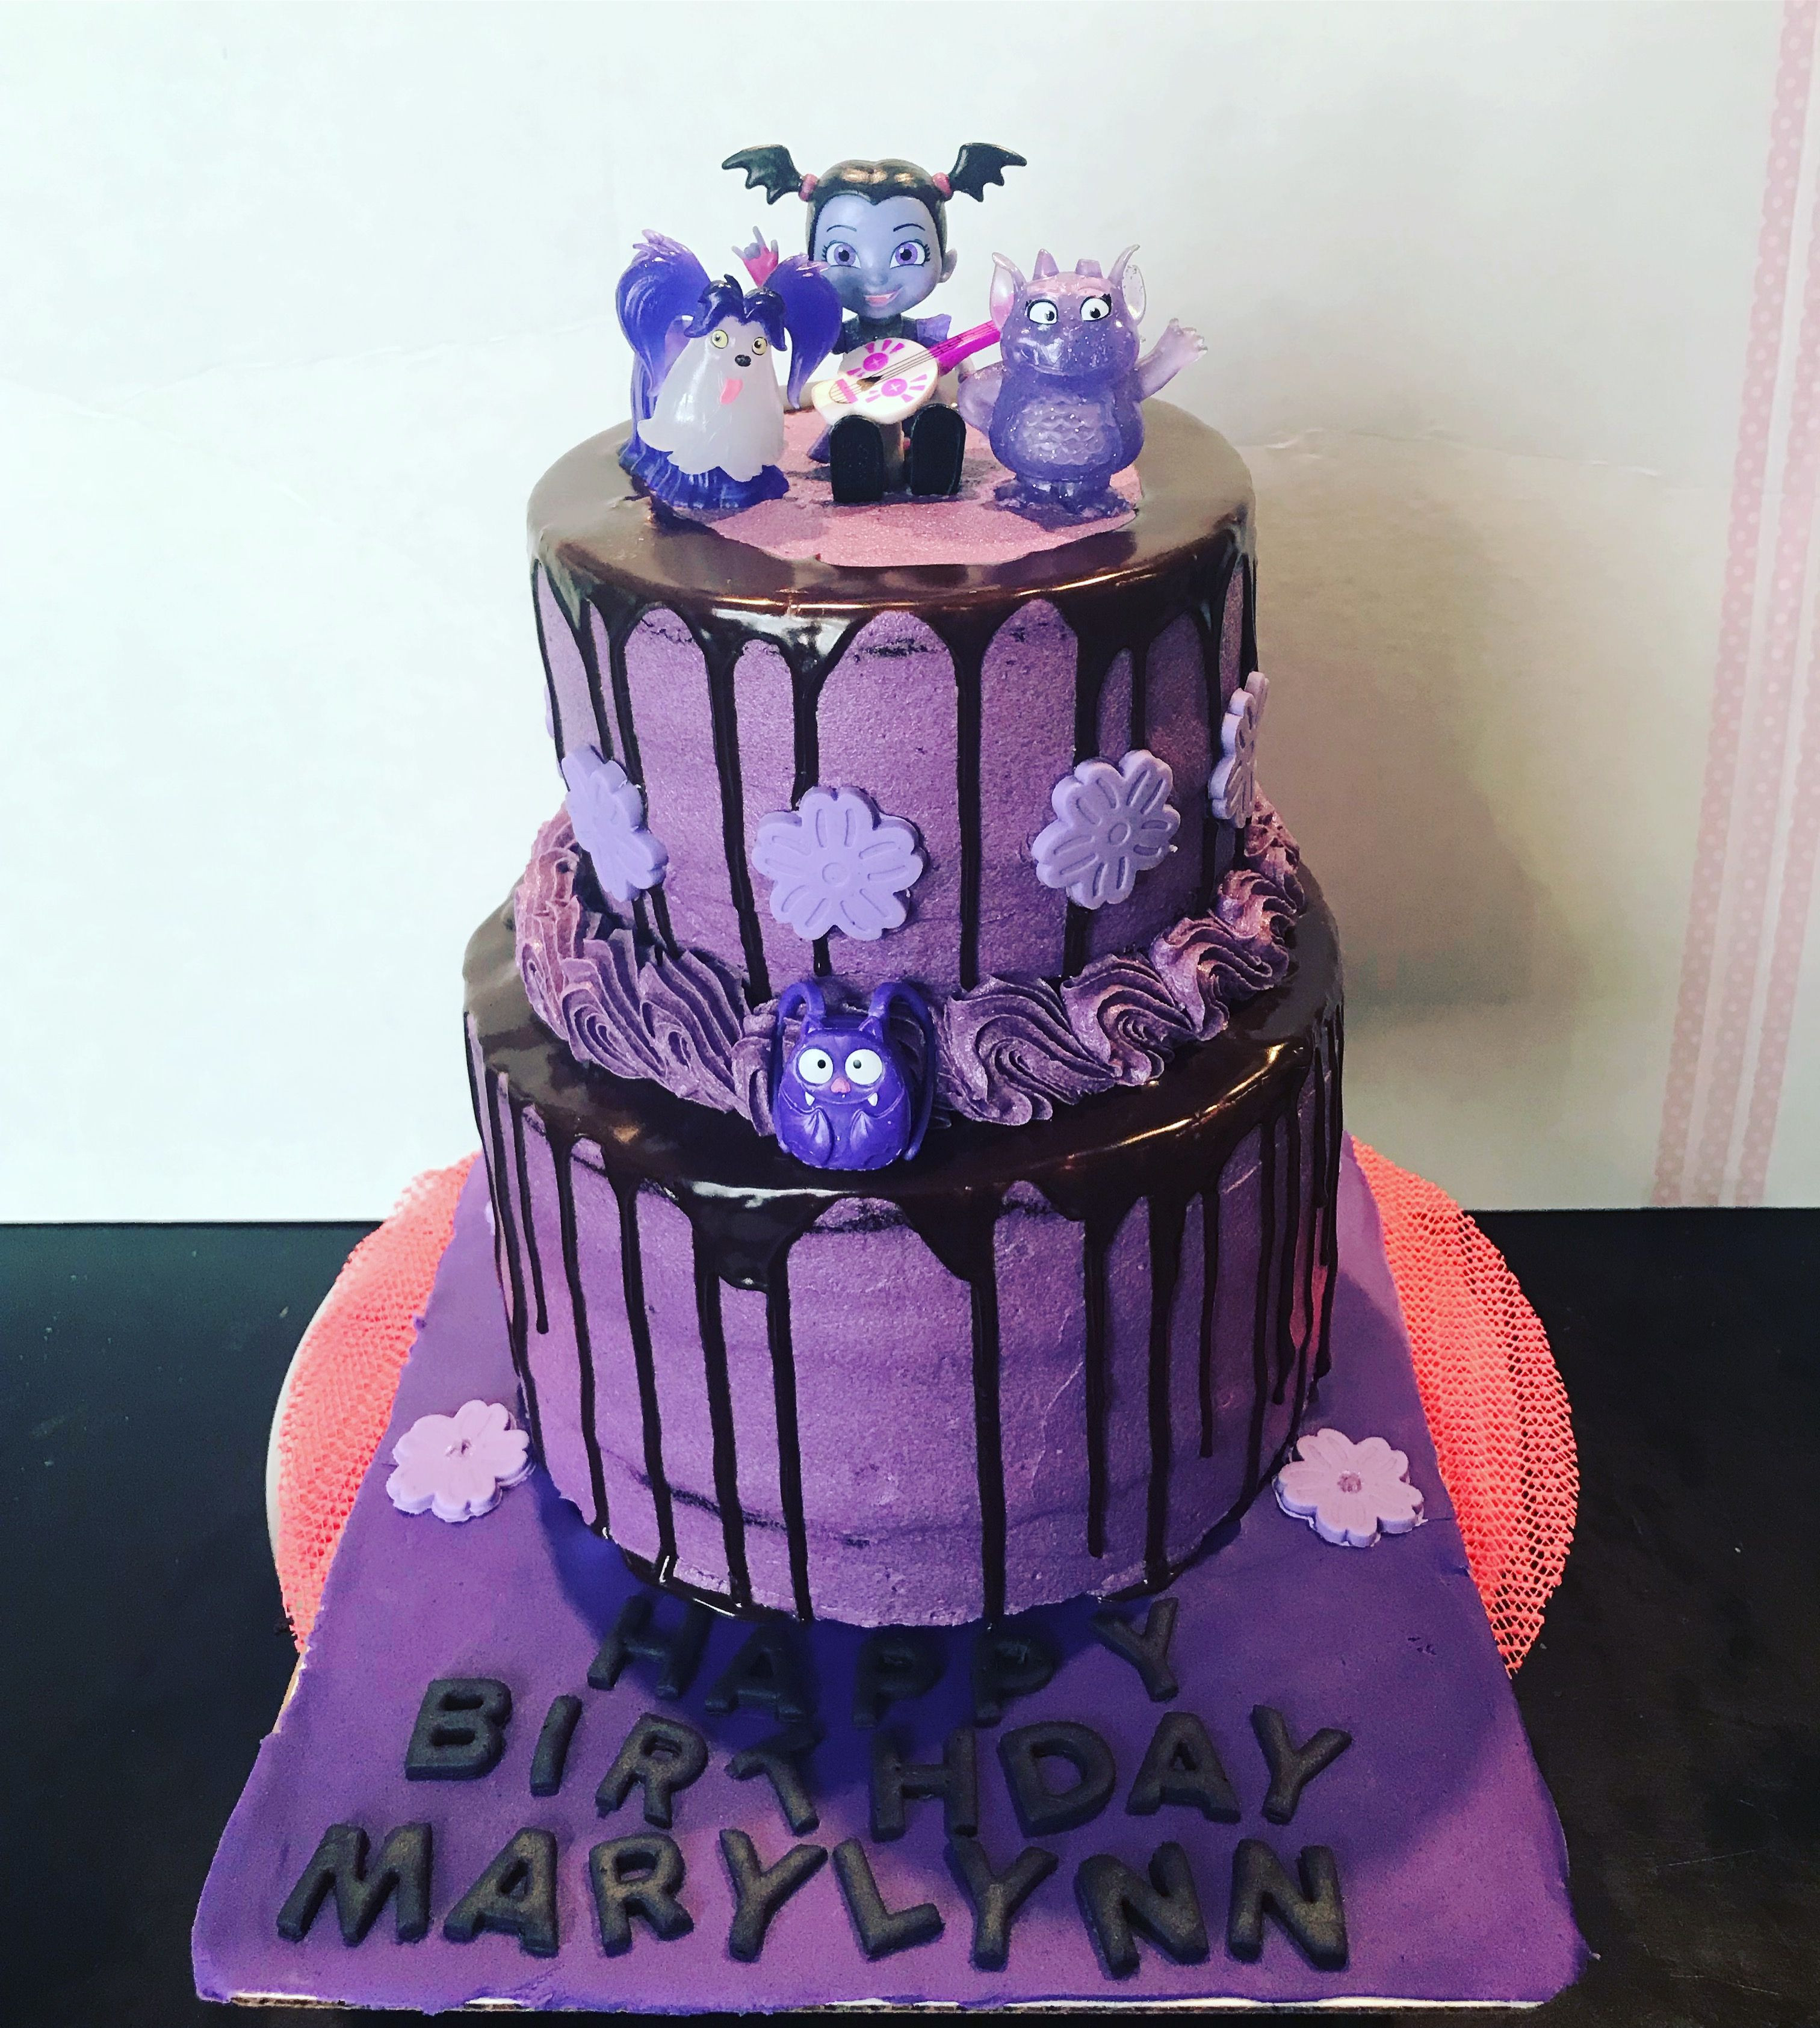 Best ideas about Vampirina Birthday Cake
. Save or Pin Vampirina inspired cupcakes Emmie39s first birthday t Now.